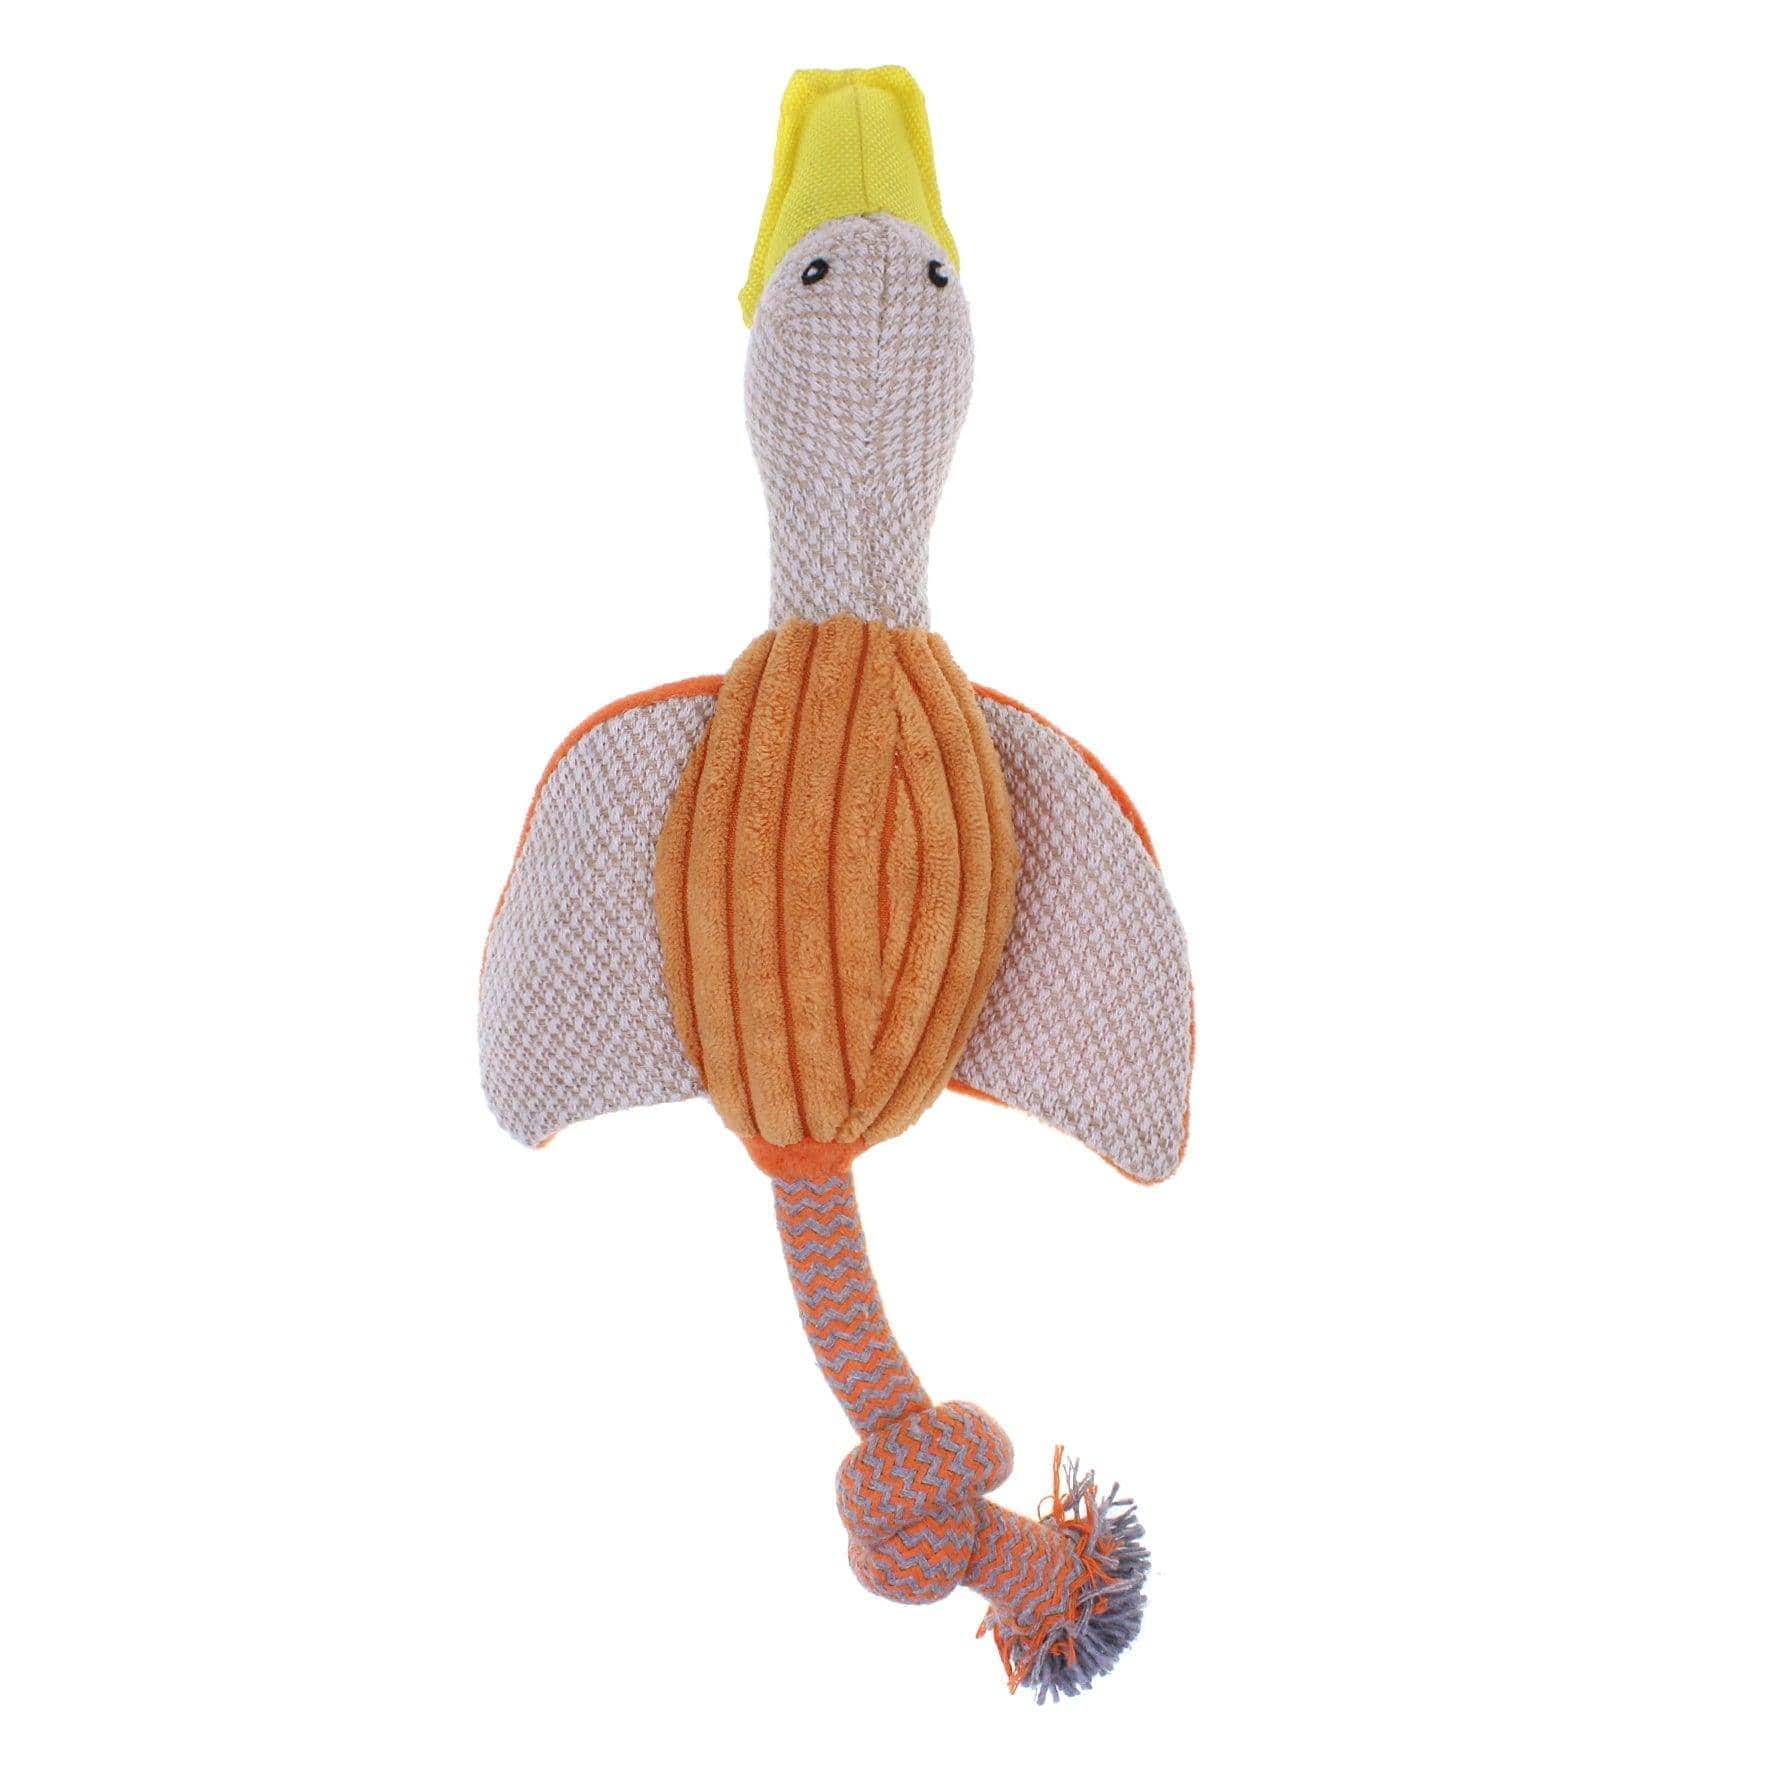 Squeaky Plush Dog Toy Fire Bird Duck